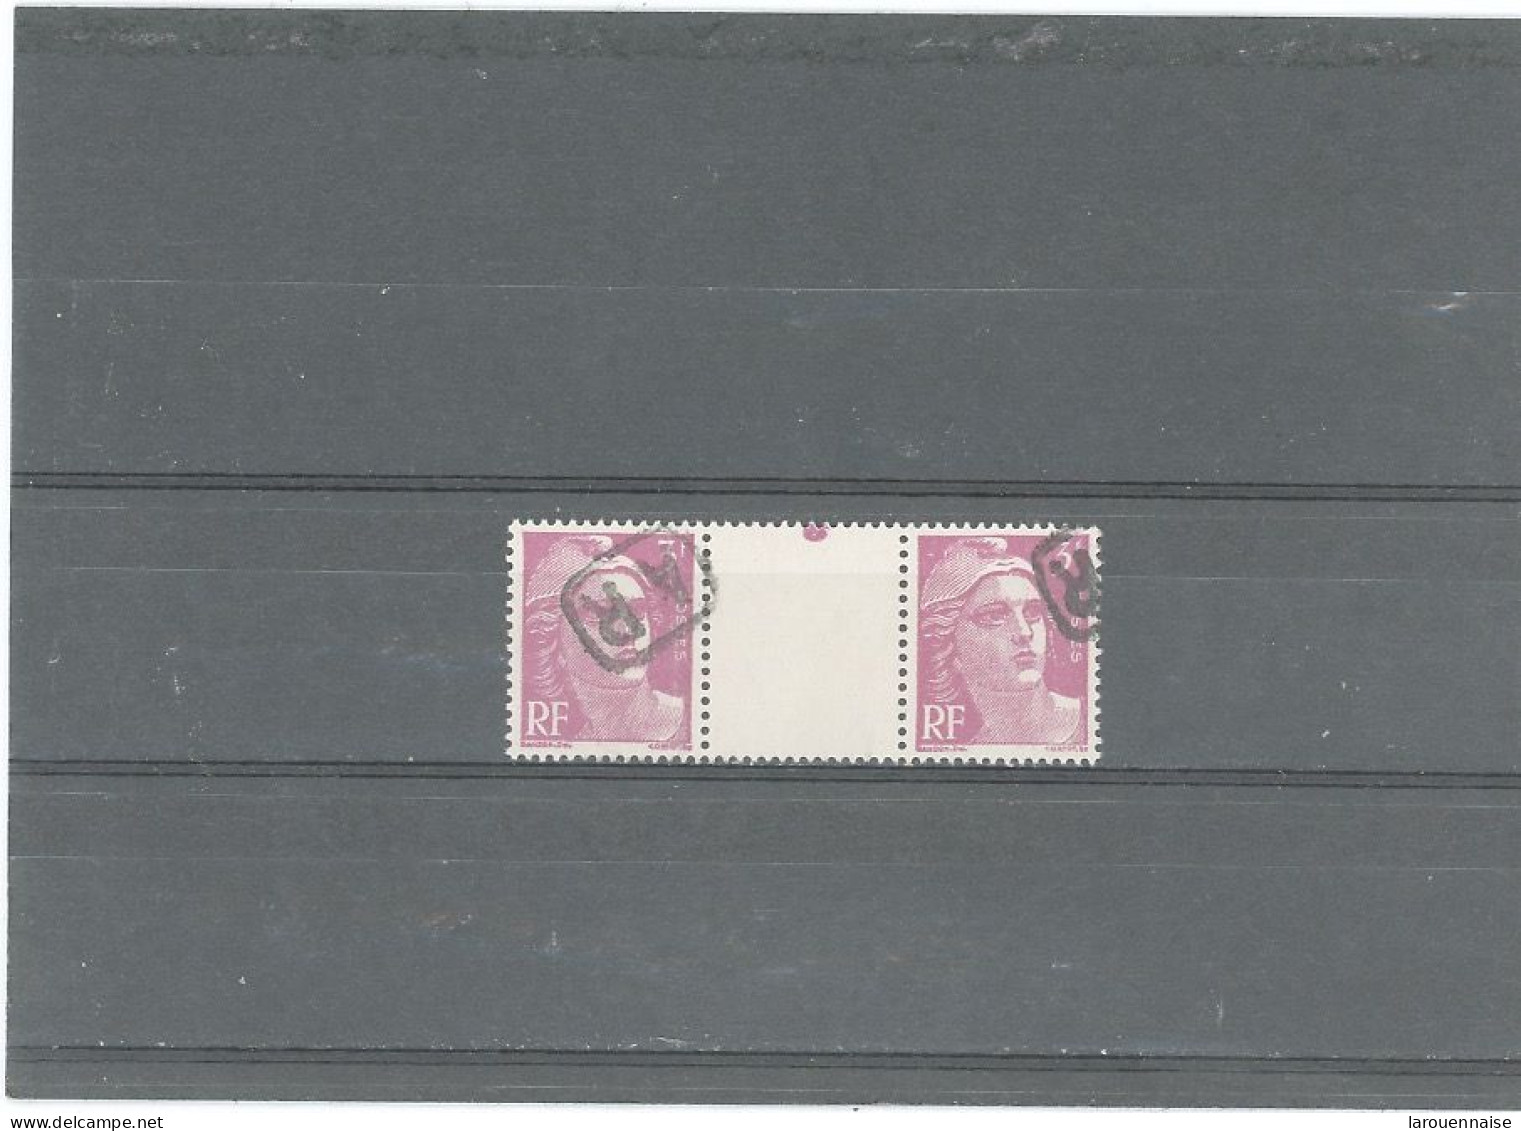 FRANCE - N°806 -3F LILAS ROSE -PAIRE INTERPANNEAU -Oblitérés AR - Used Stamps